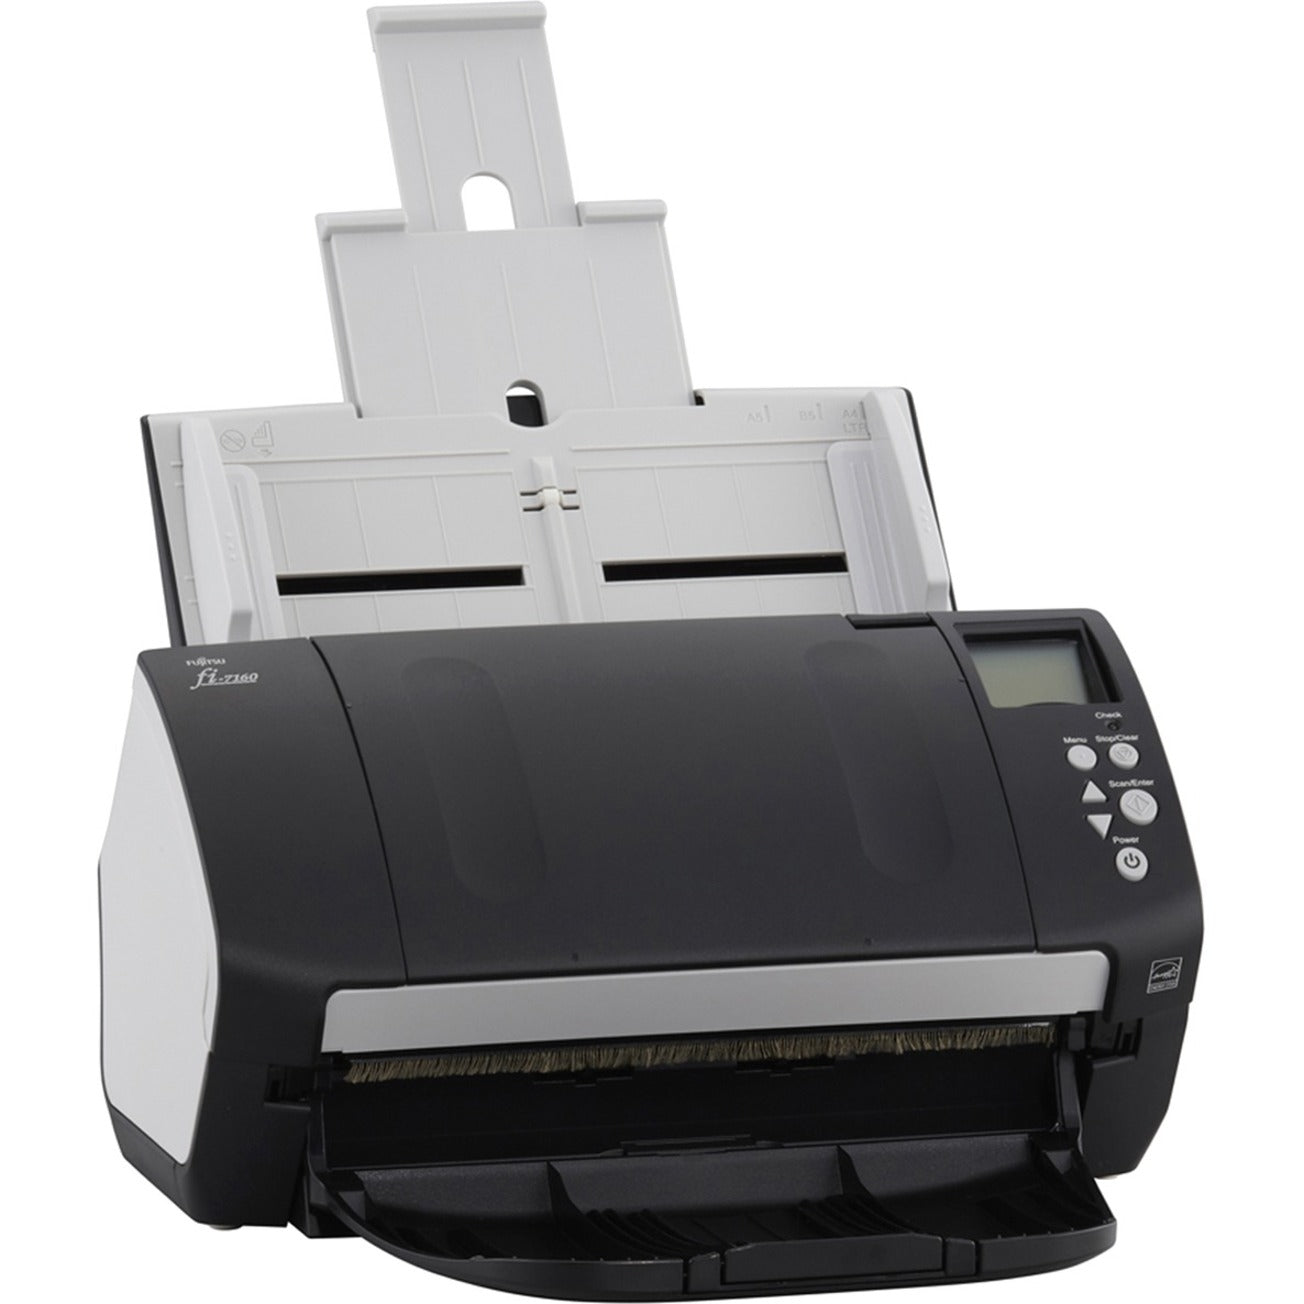 Fujitsu PA03670-B085 fi-7160 Color Duplex Professional Document Scanner, 60PPM USB Duplex